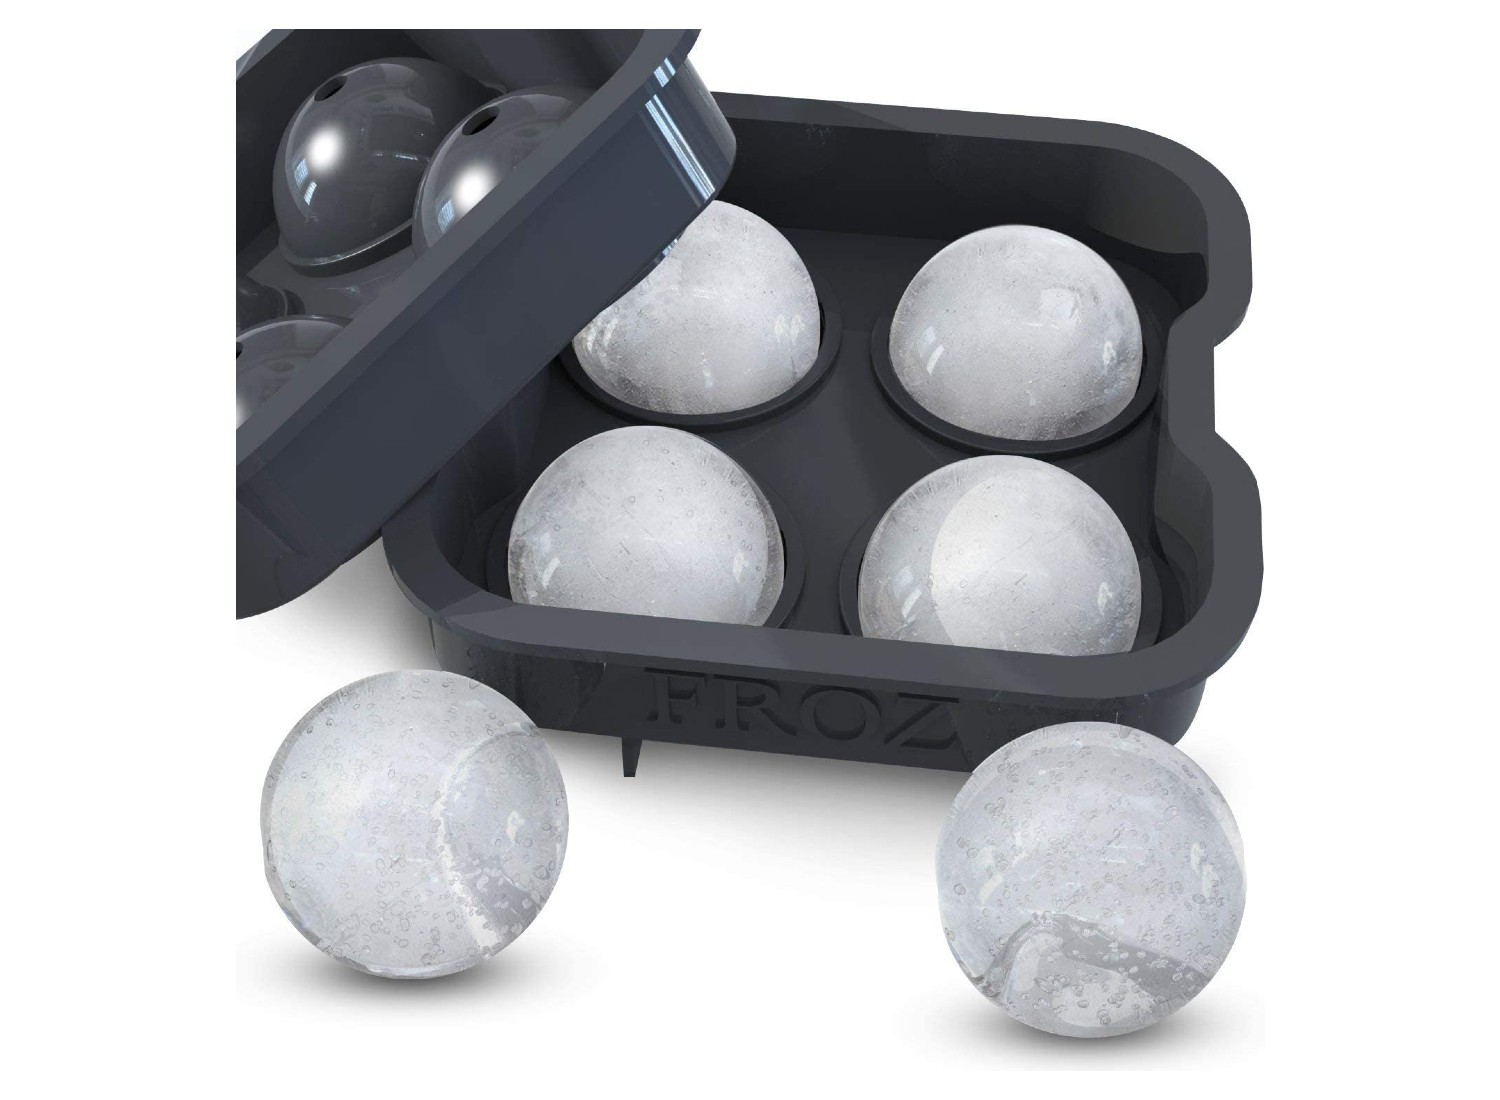 Handy Gourmet Ice Ball Tray - Slow, Long Lasting Melt - TEAL - Large I